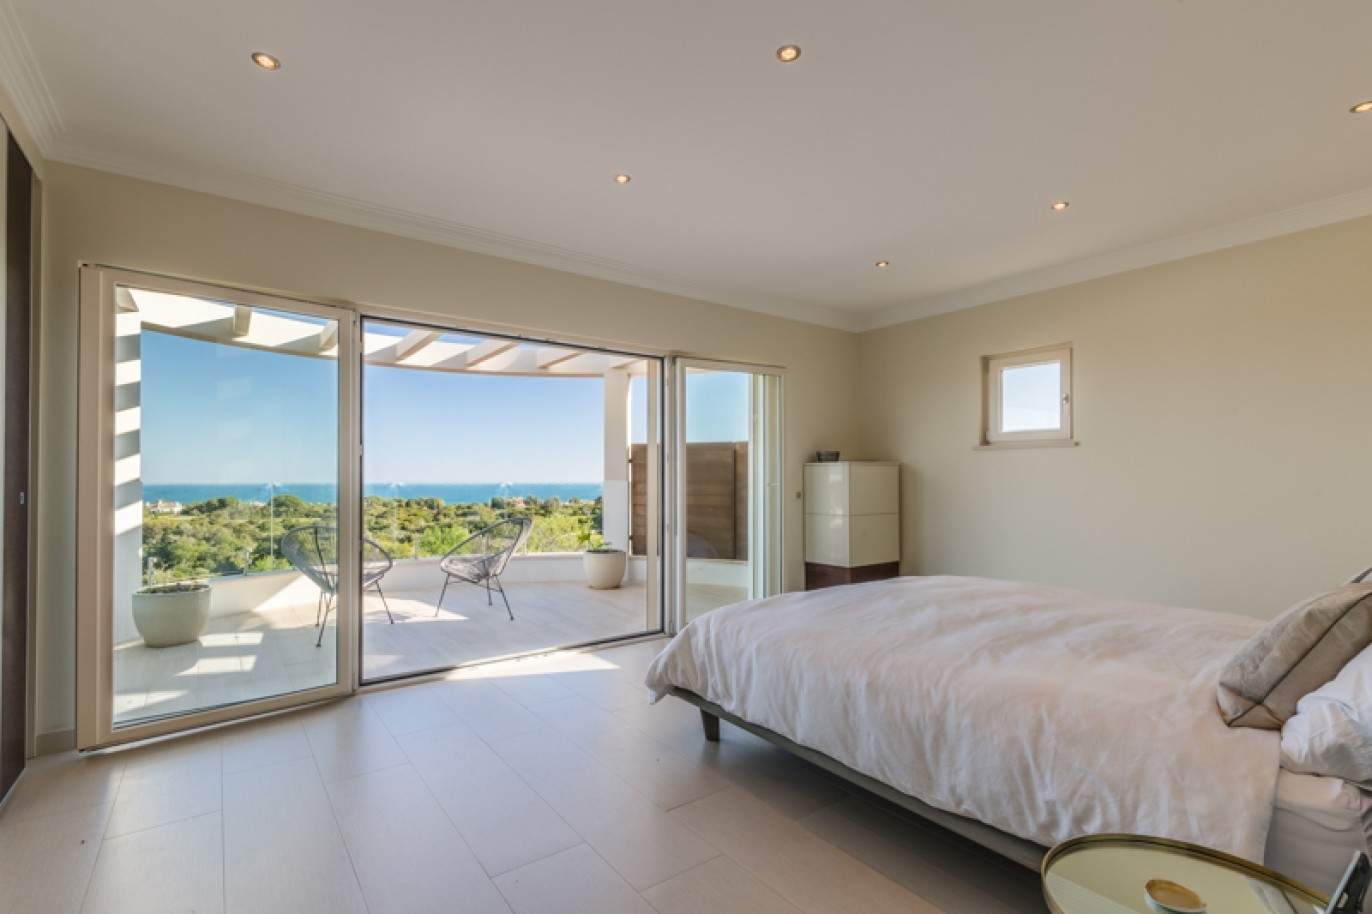 Villa for sale, with sea view, near beach and golf, Algarve, Portugal_76420